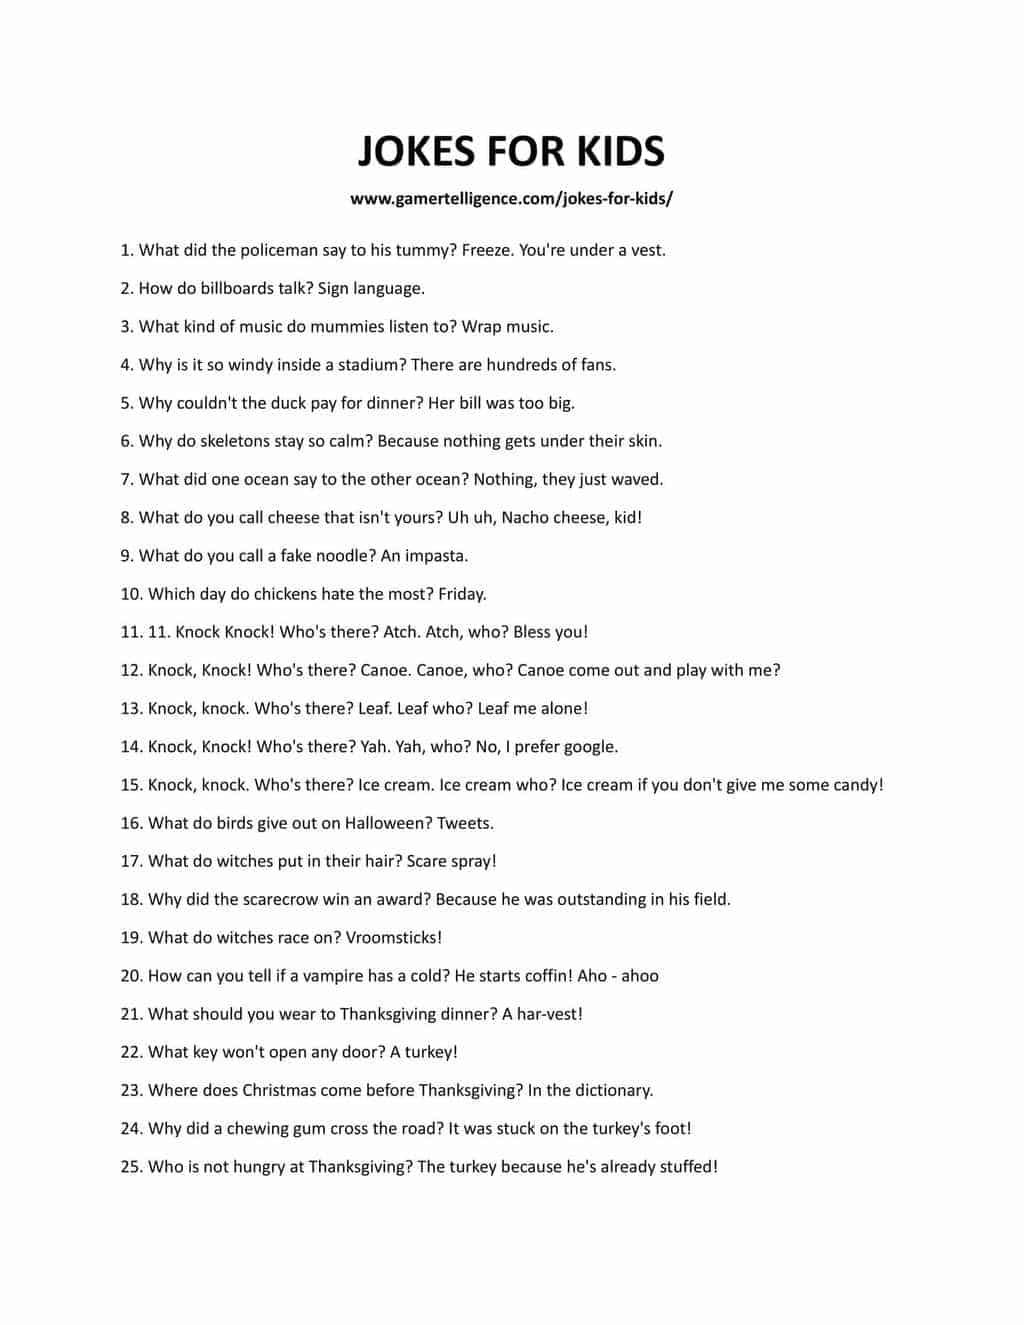 Downloadable and printable list of jokes